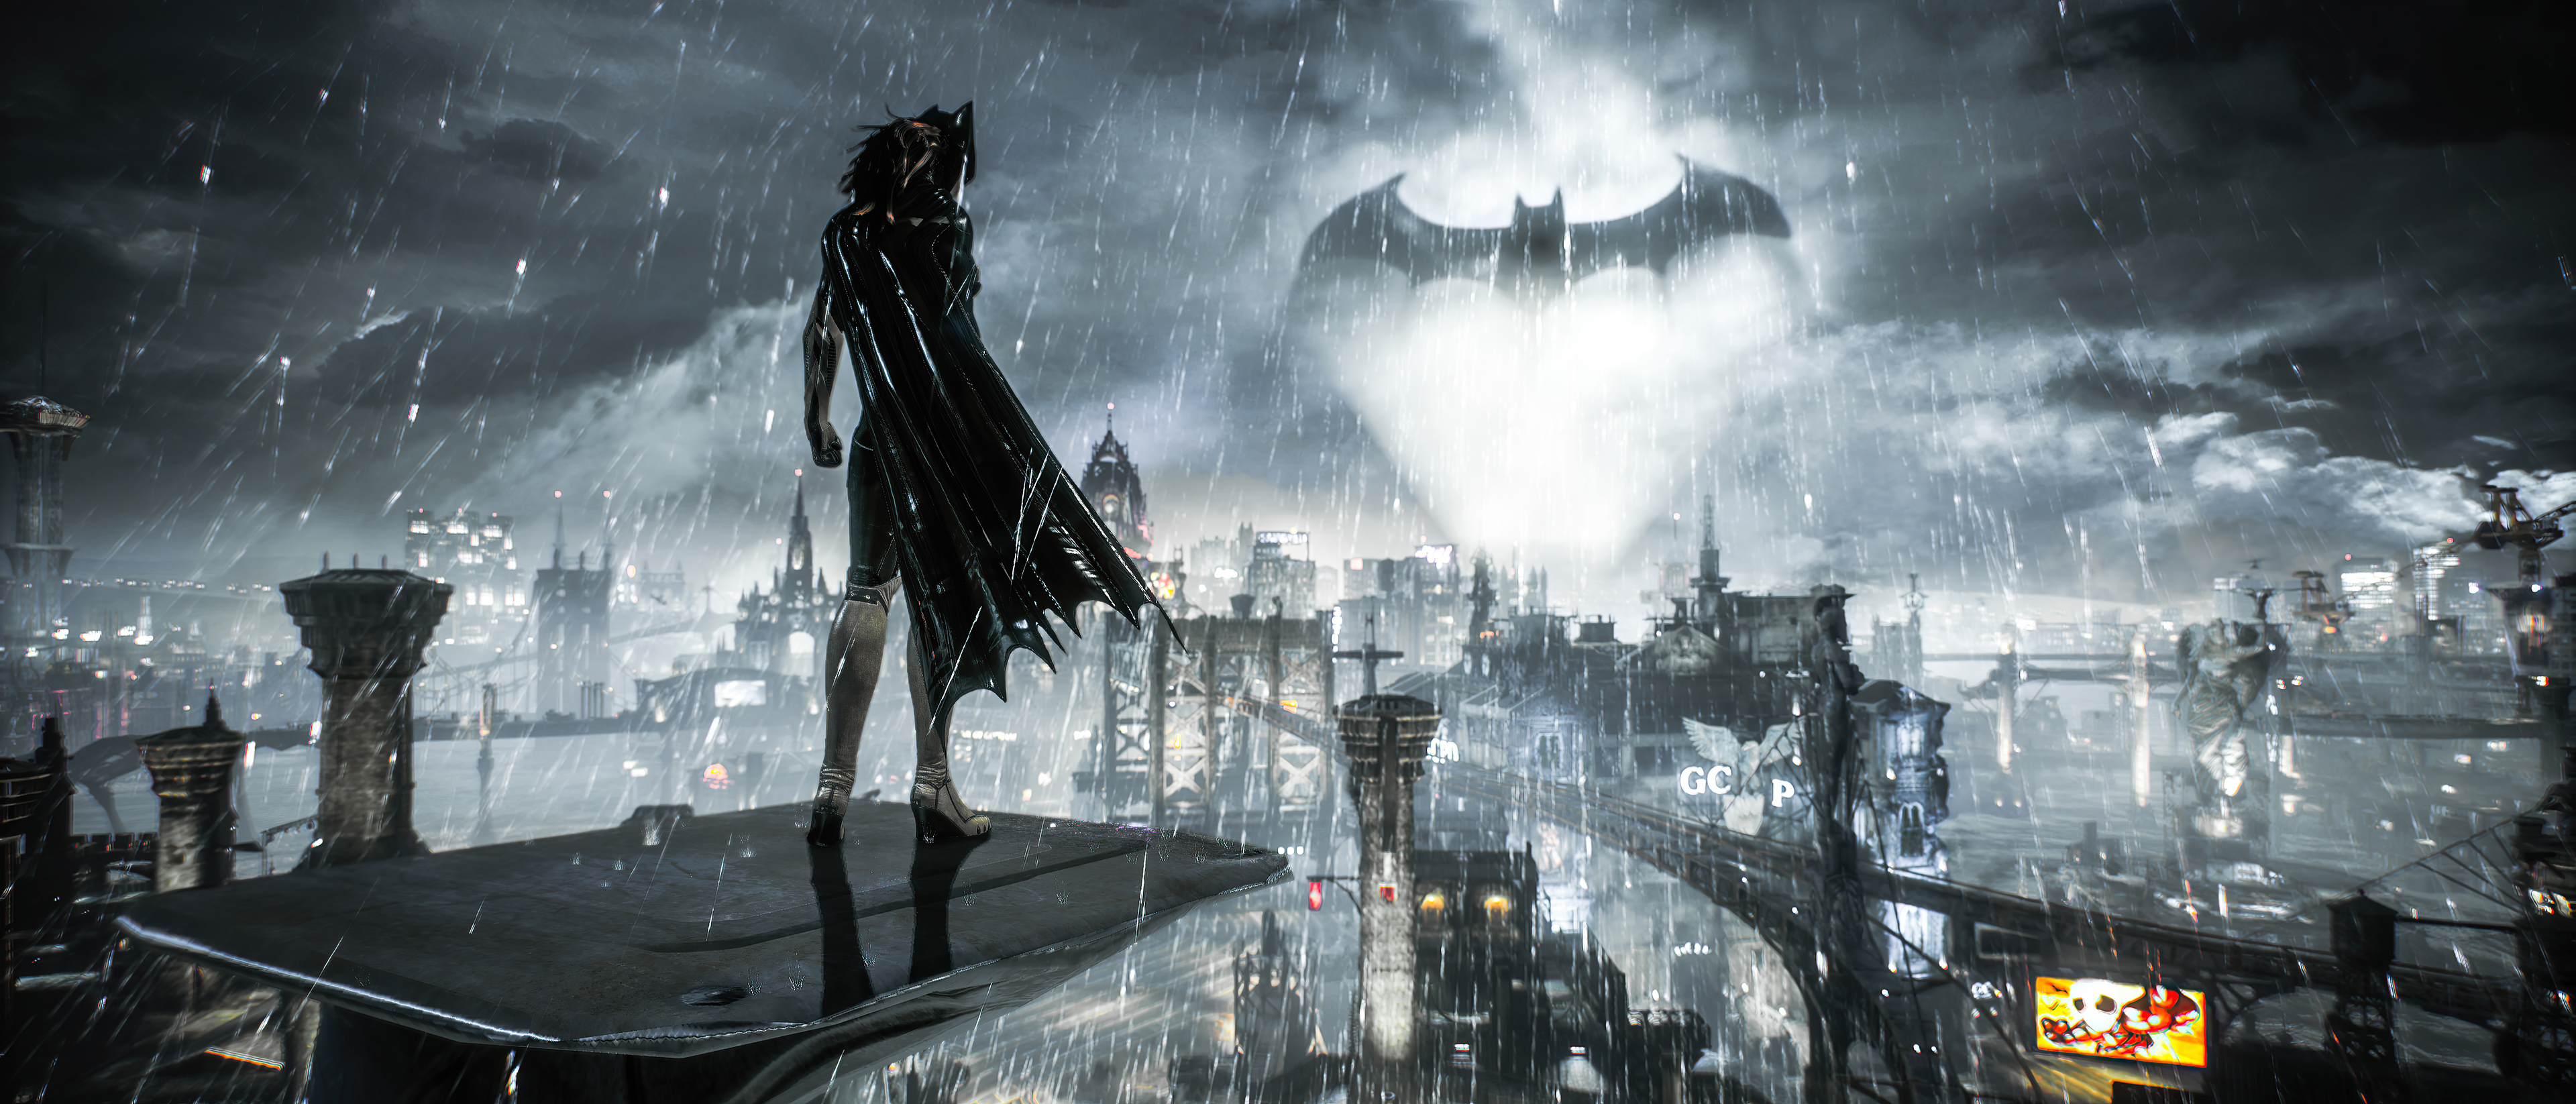 Wallpaper Batman Arkham Knight 5k 4k wallpaper game Best Games 2015 DC  Comics Batman Gotham review PS4 xBox One PC Games 3970